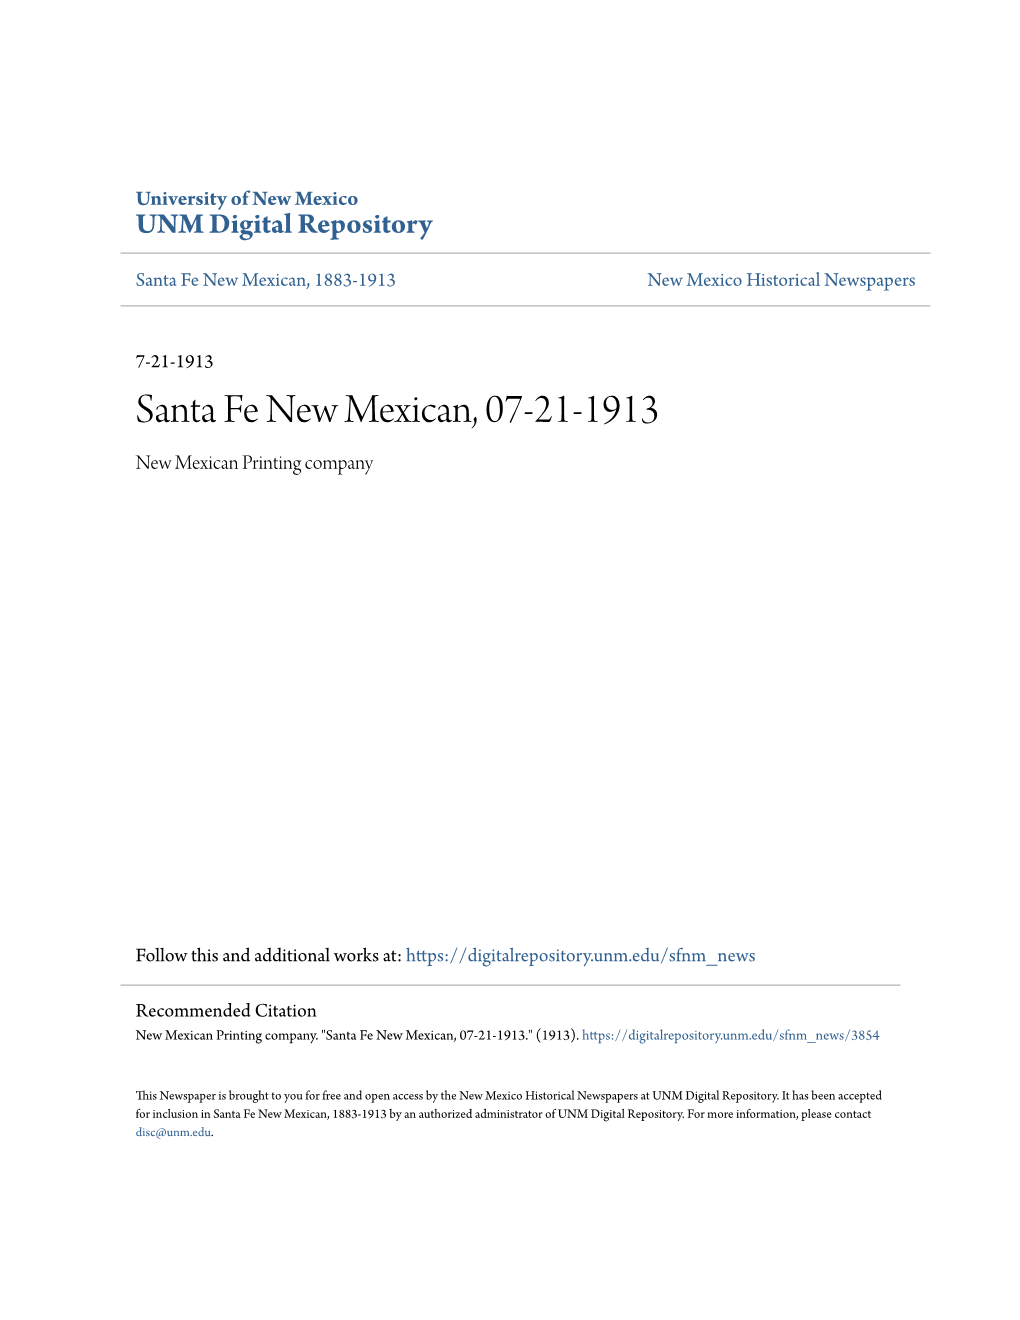 Santa Fe New Mexican, 07-21-1913 New Mexican Printing Company